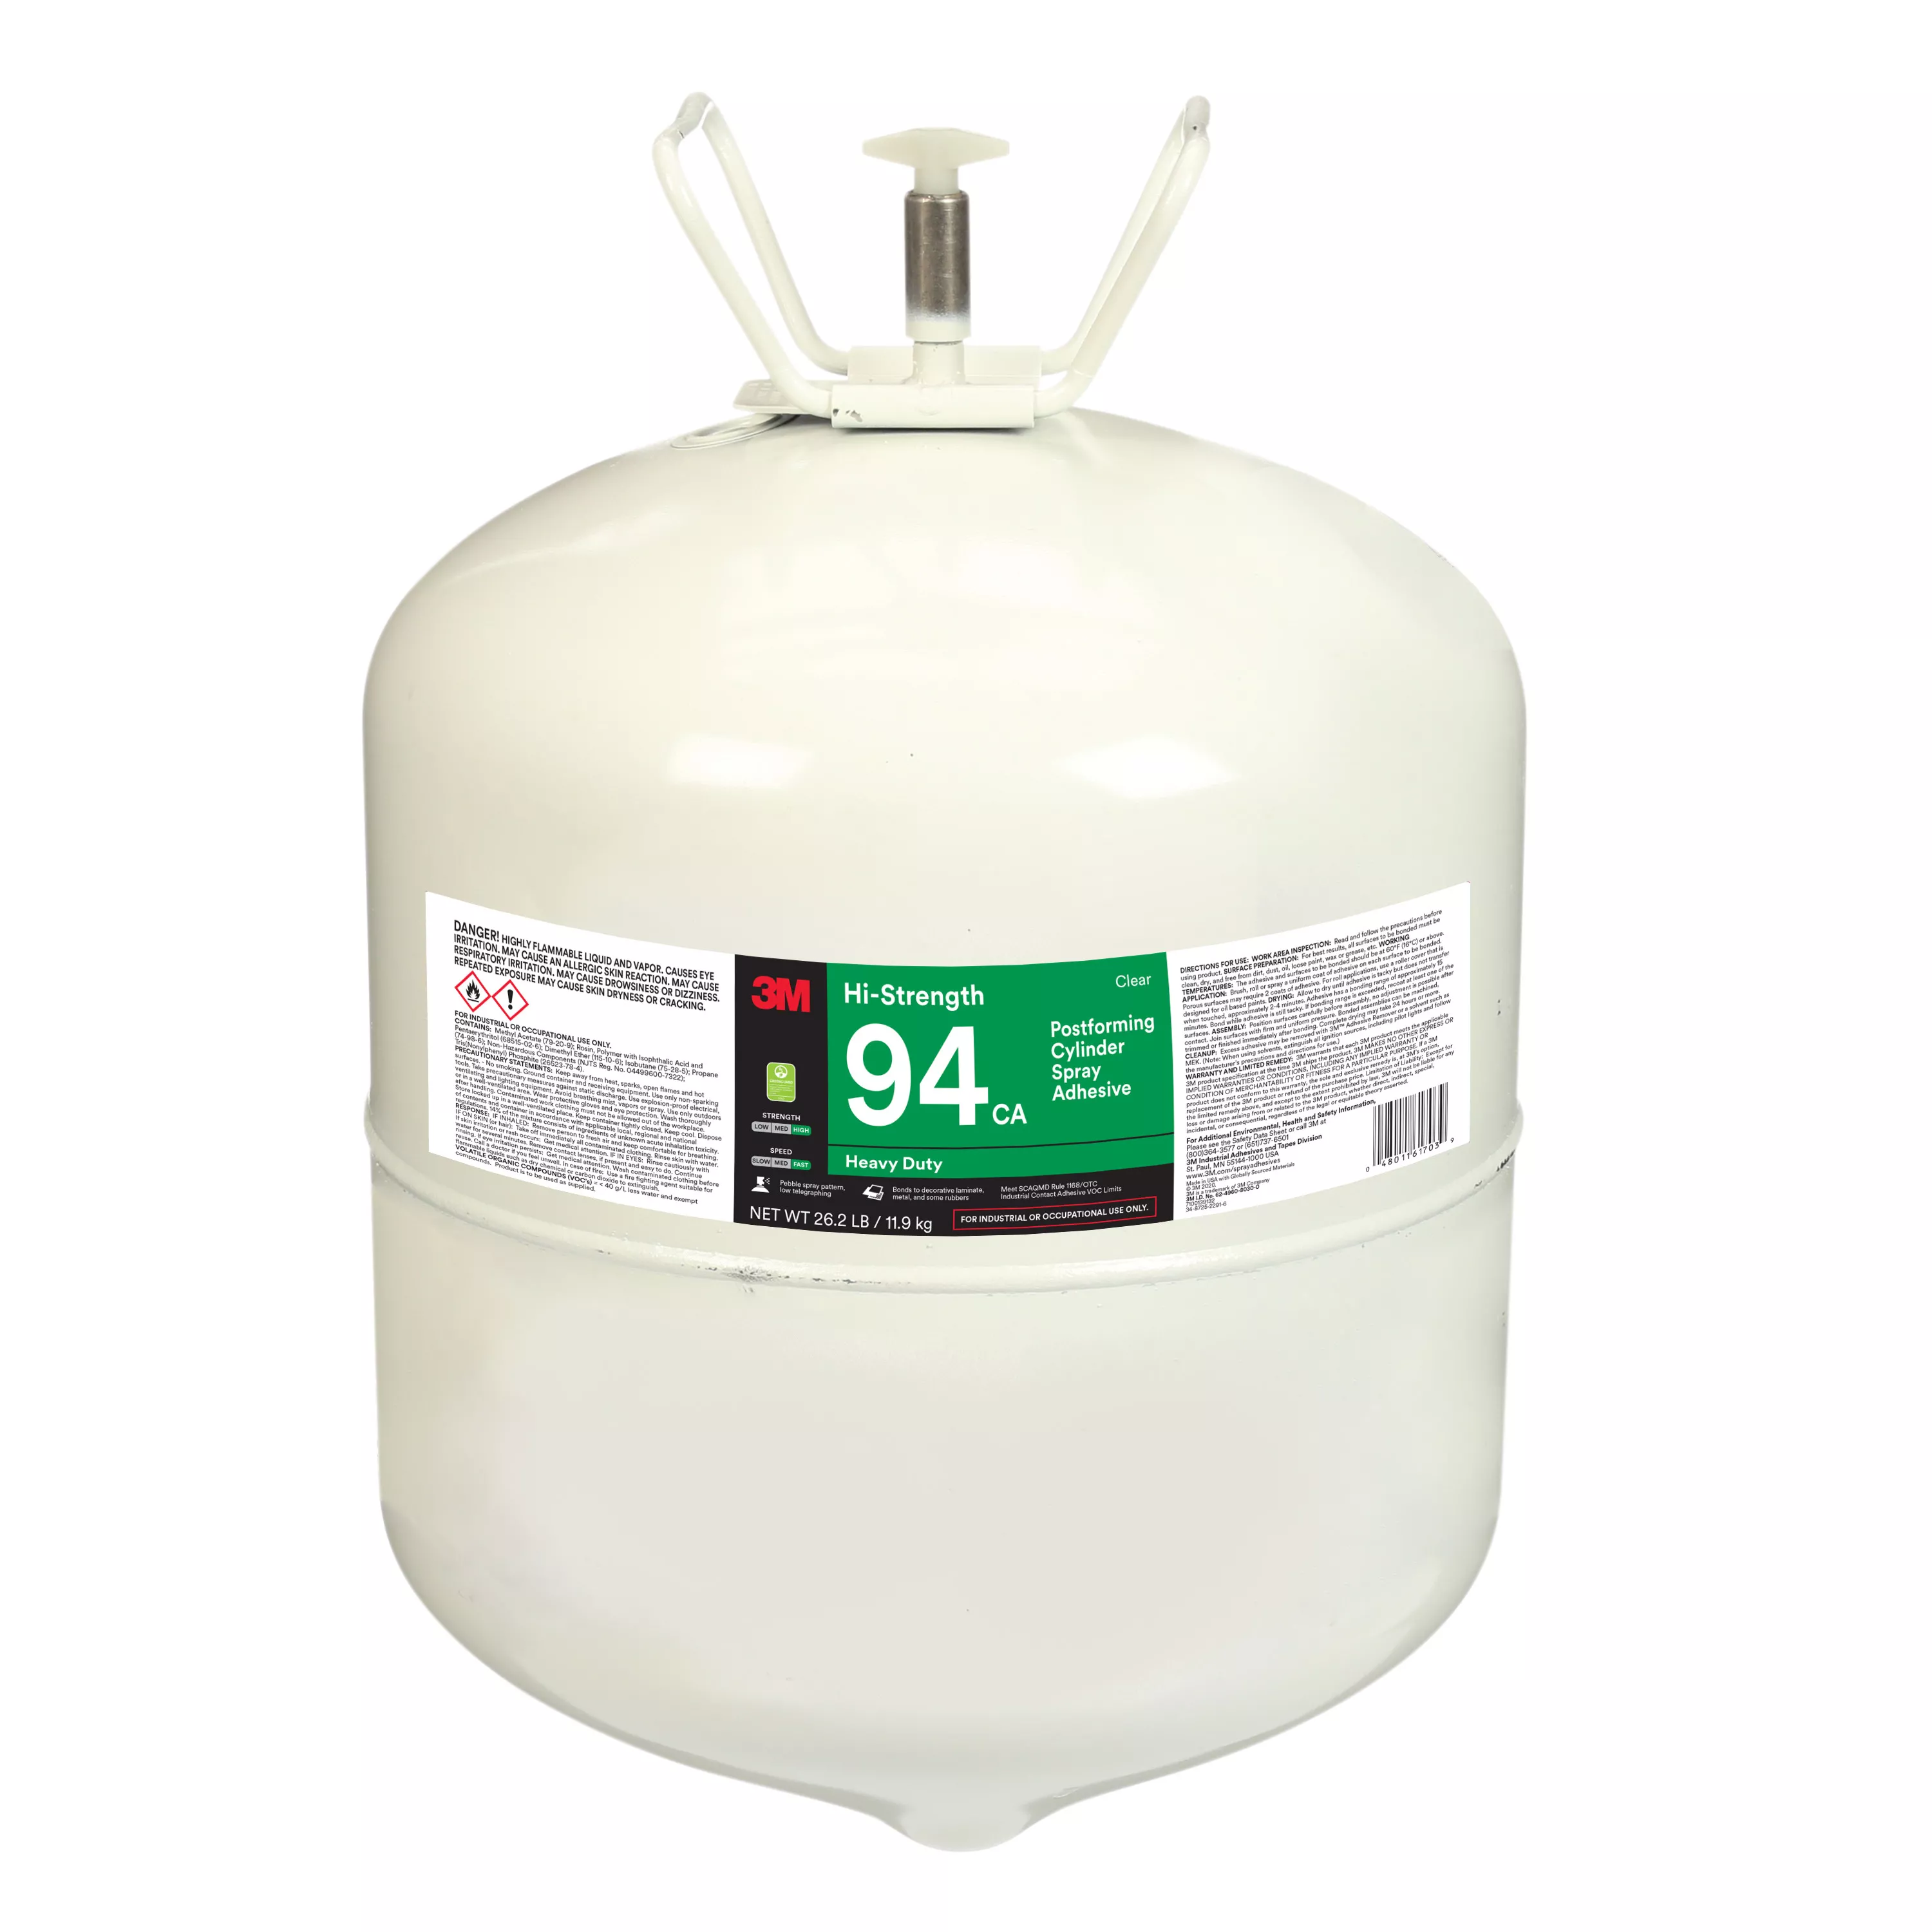 3M™ Hi-Strength Postforming 94 CA Cylinder Spray Adhesive, Clear, Large
Cylinder (Net Wt 26.2 lb), Case